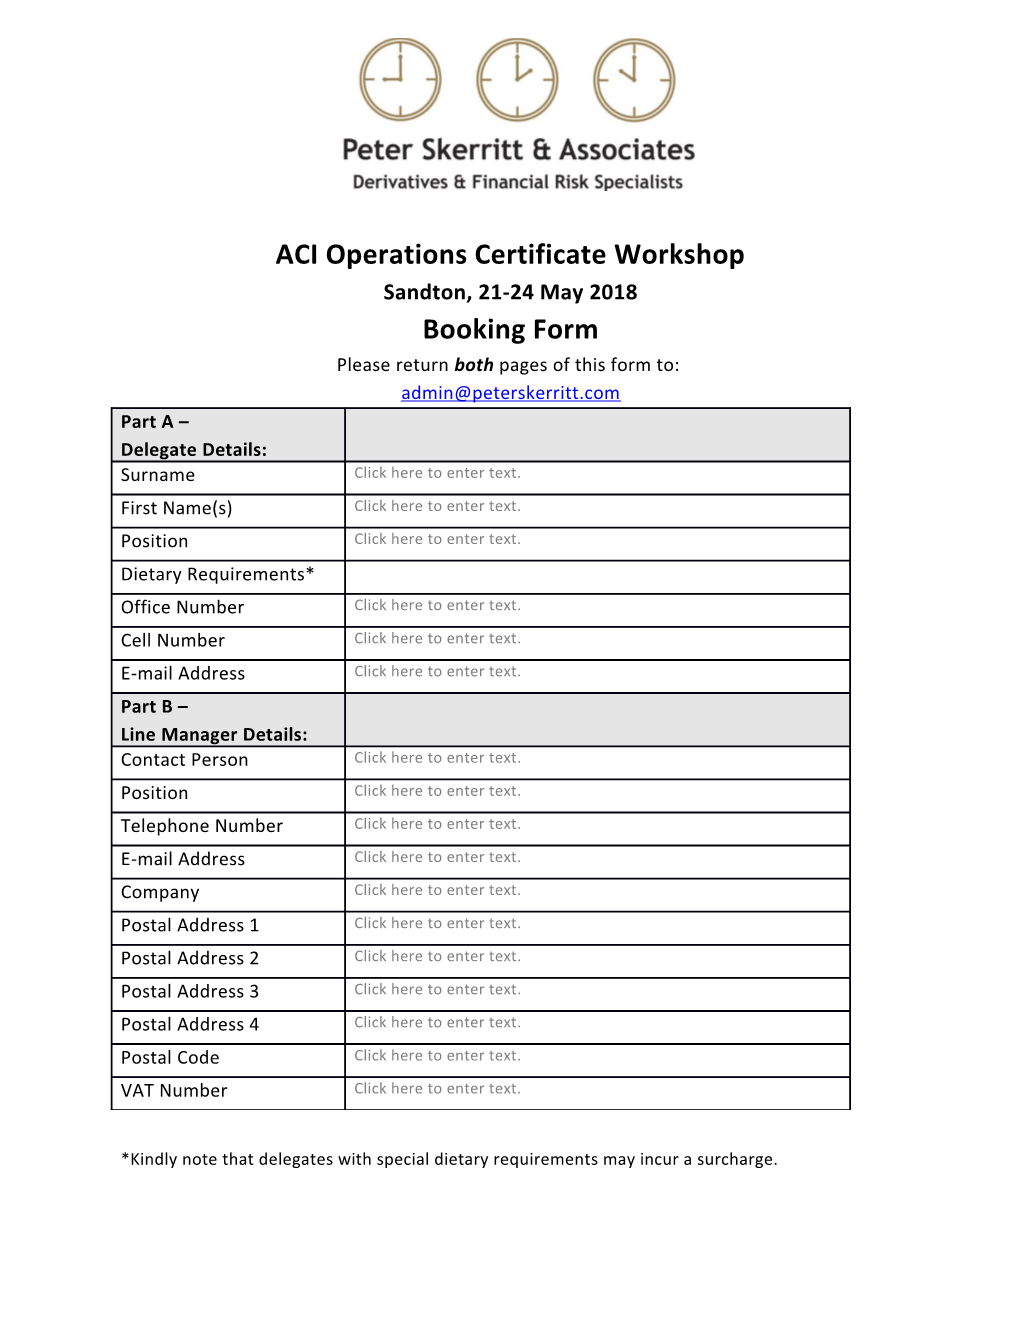 ACI Operations Certificate Workshop